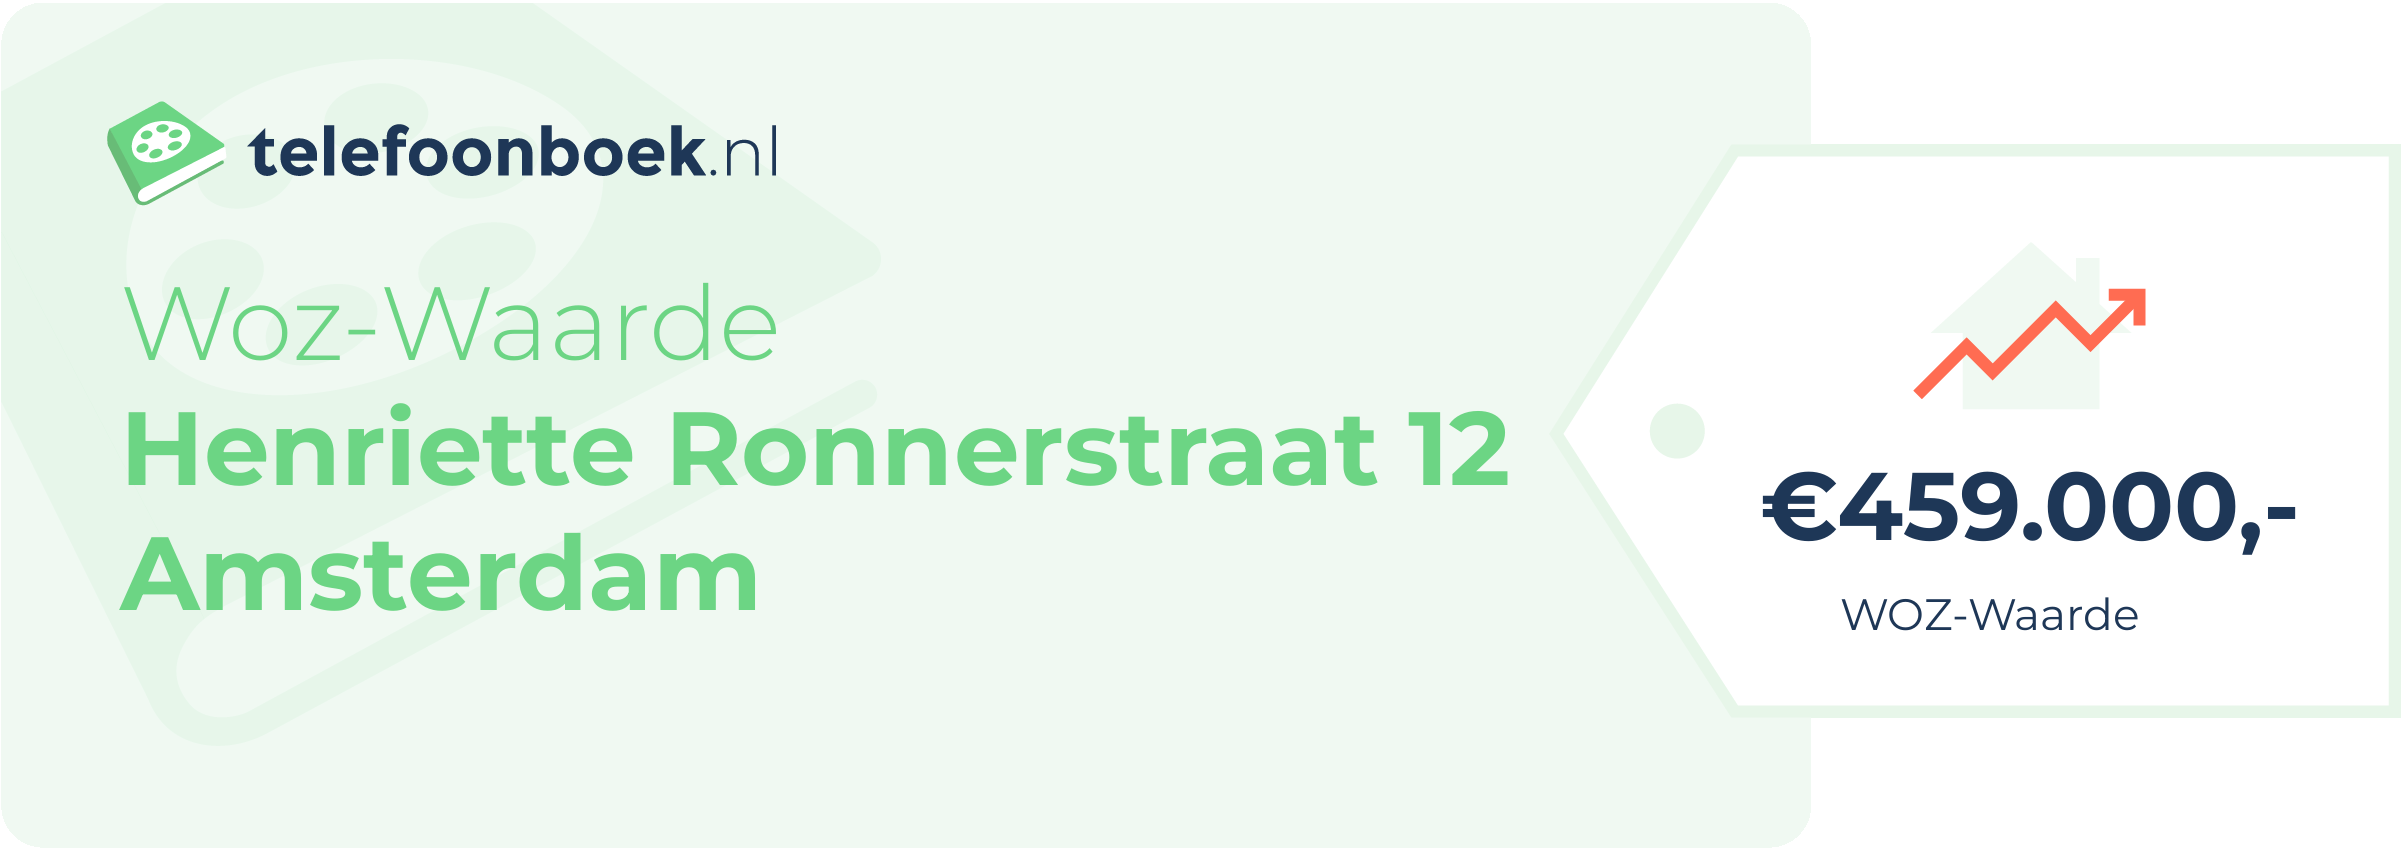 WOZ-waarde Henriette Ronnerstraat 12 Amsterdam